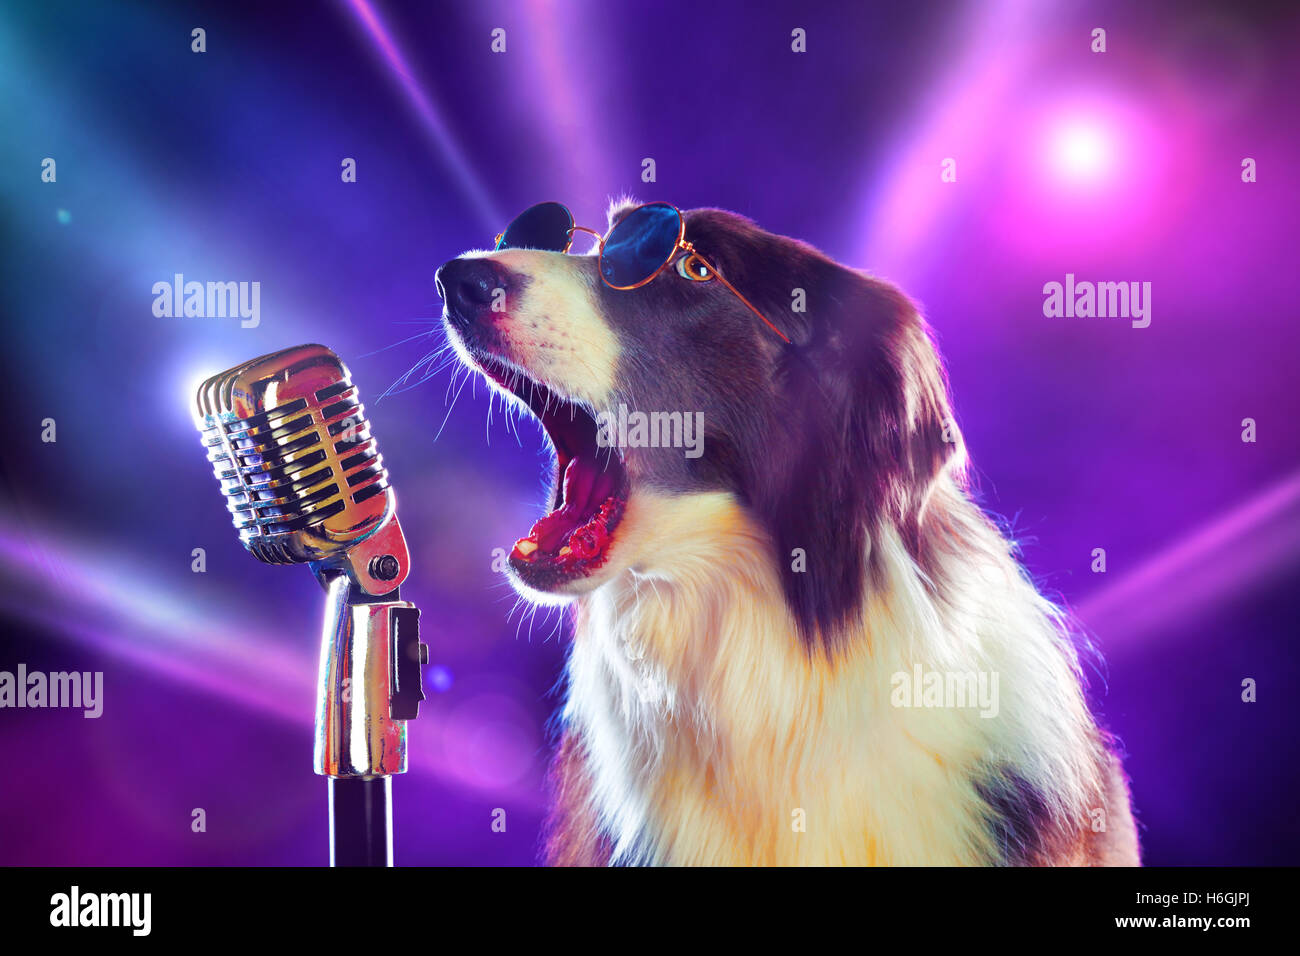 Next doggo portrait. @hutchosgsps sat like a rock star, Thankyou